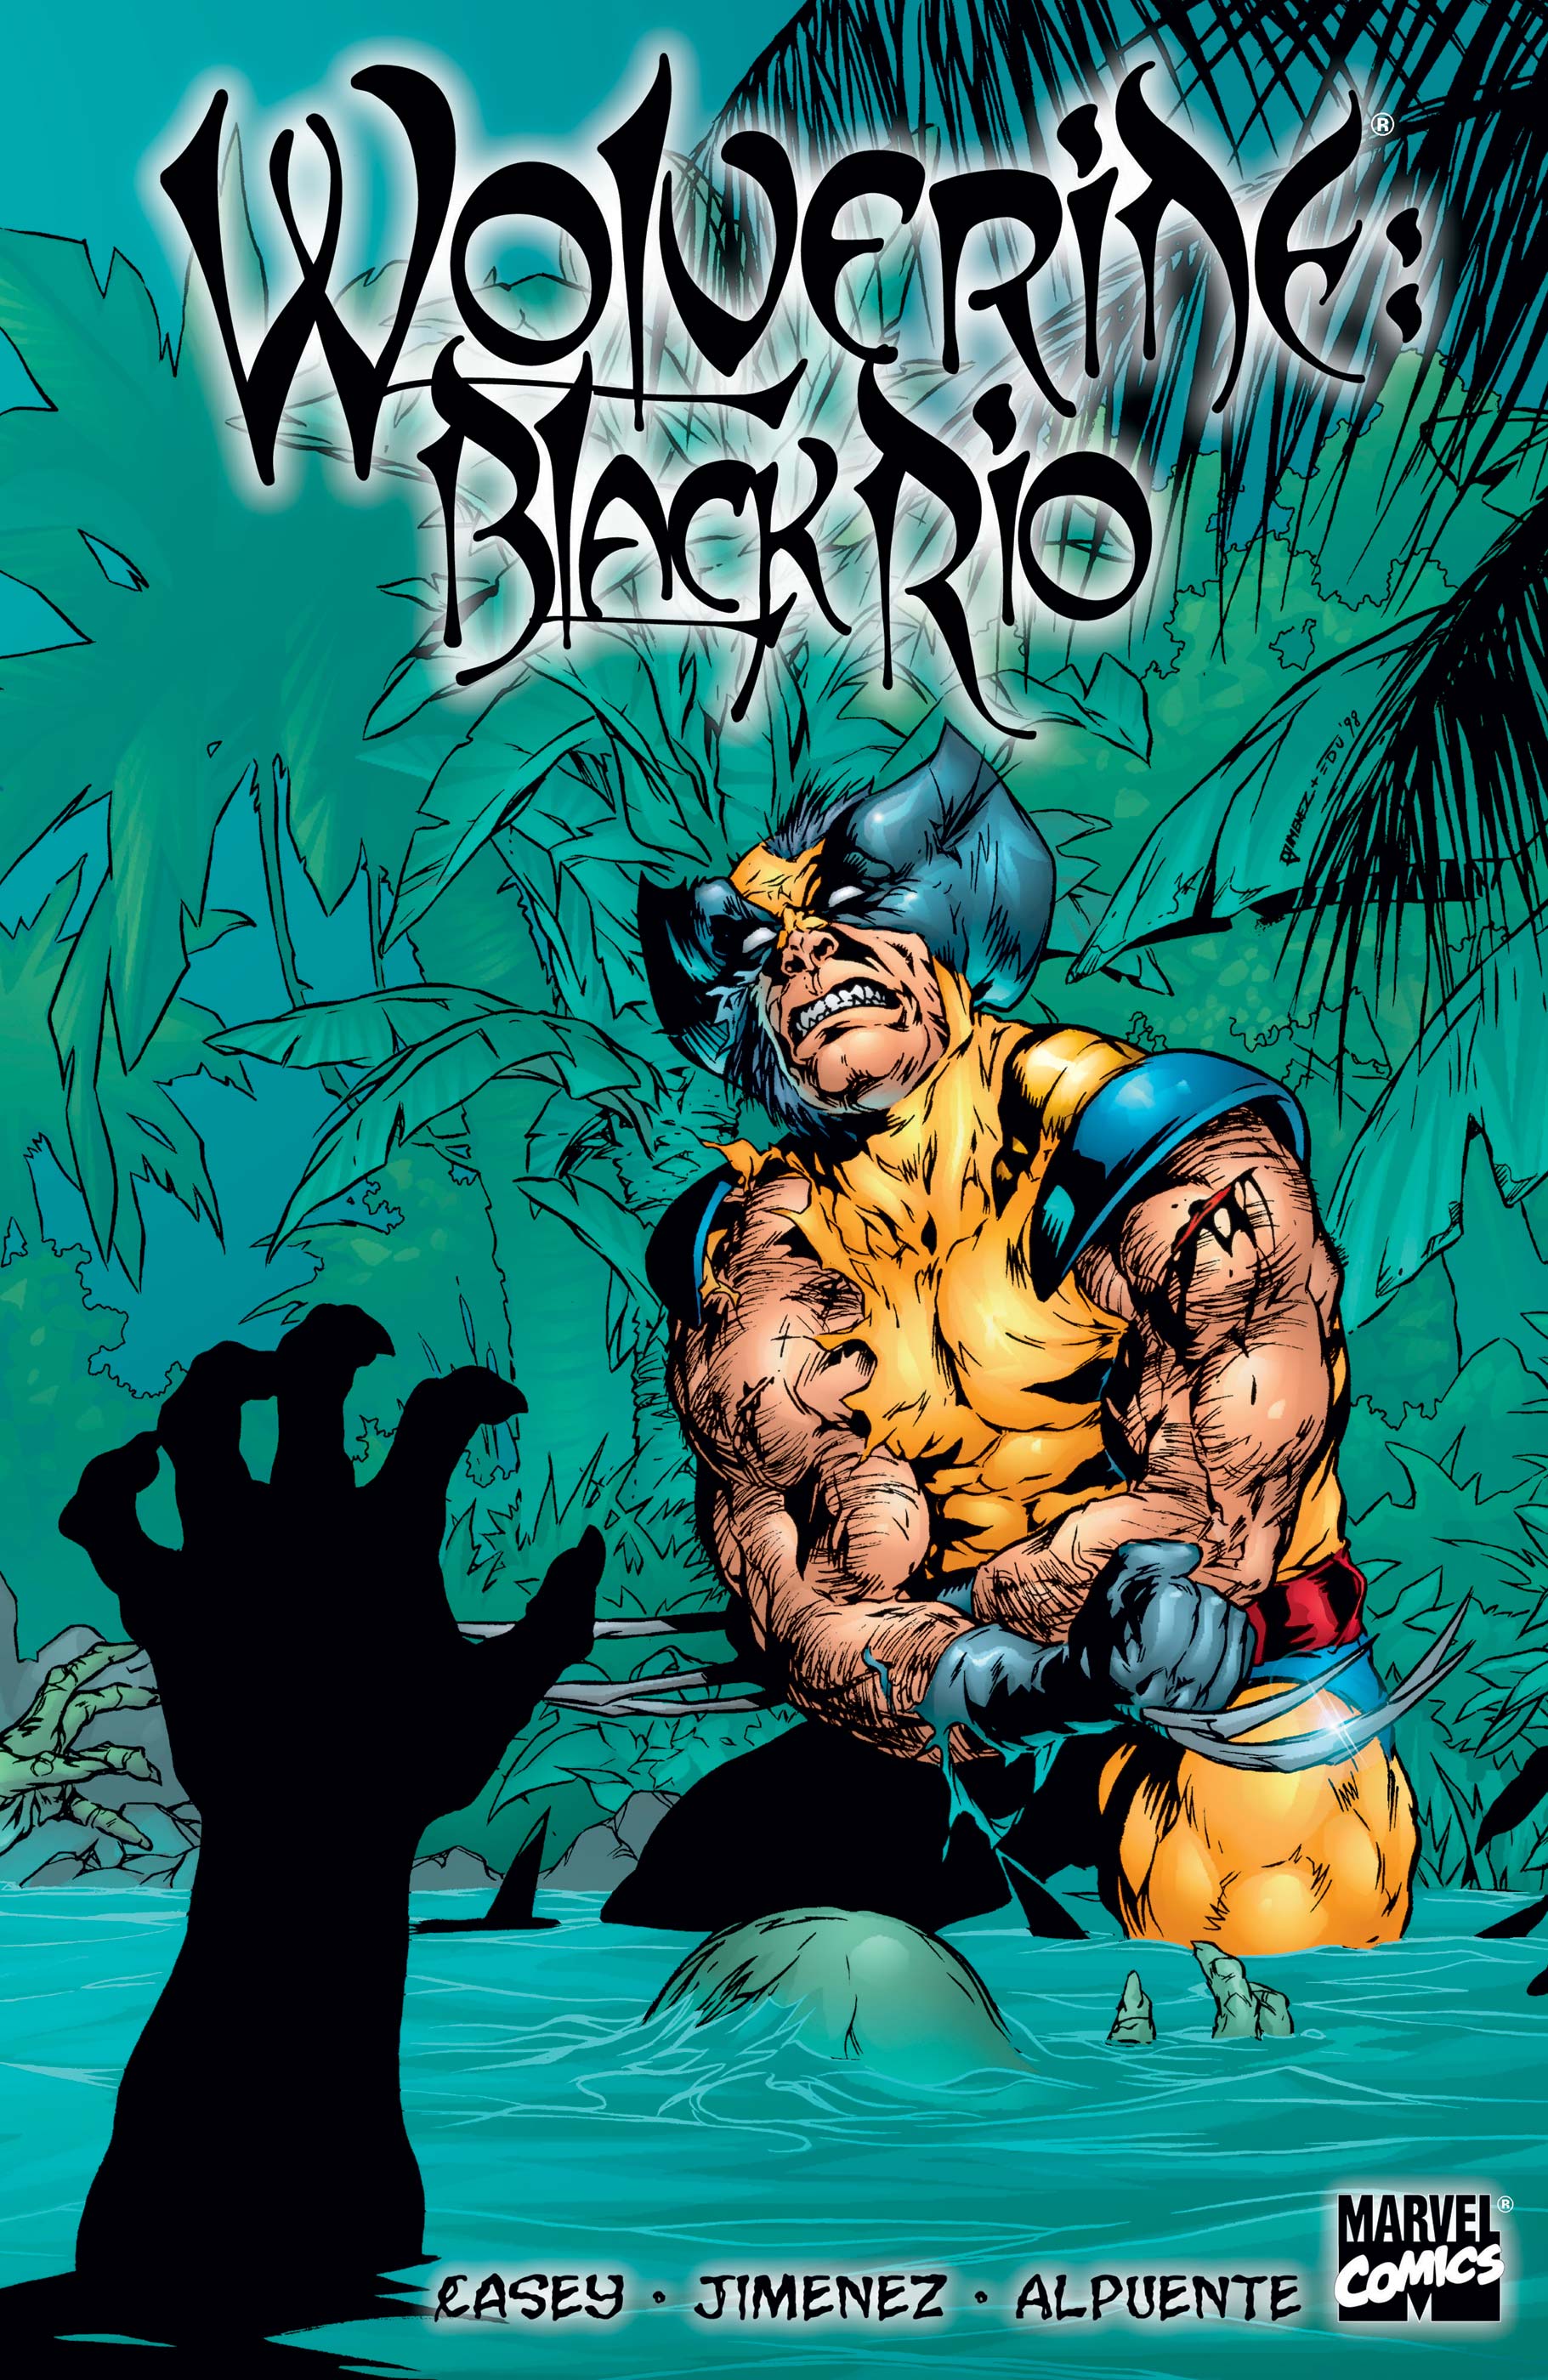 Wolverine: Black Rio (1998) #1